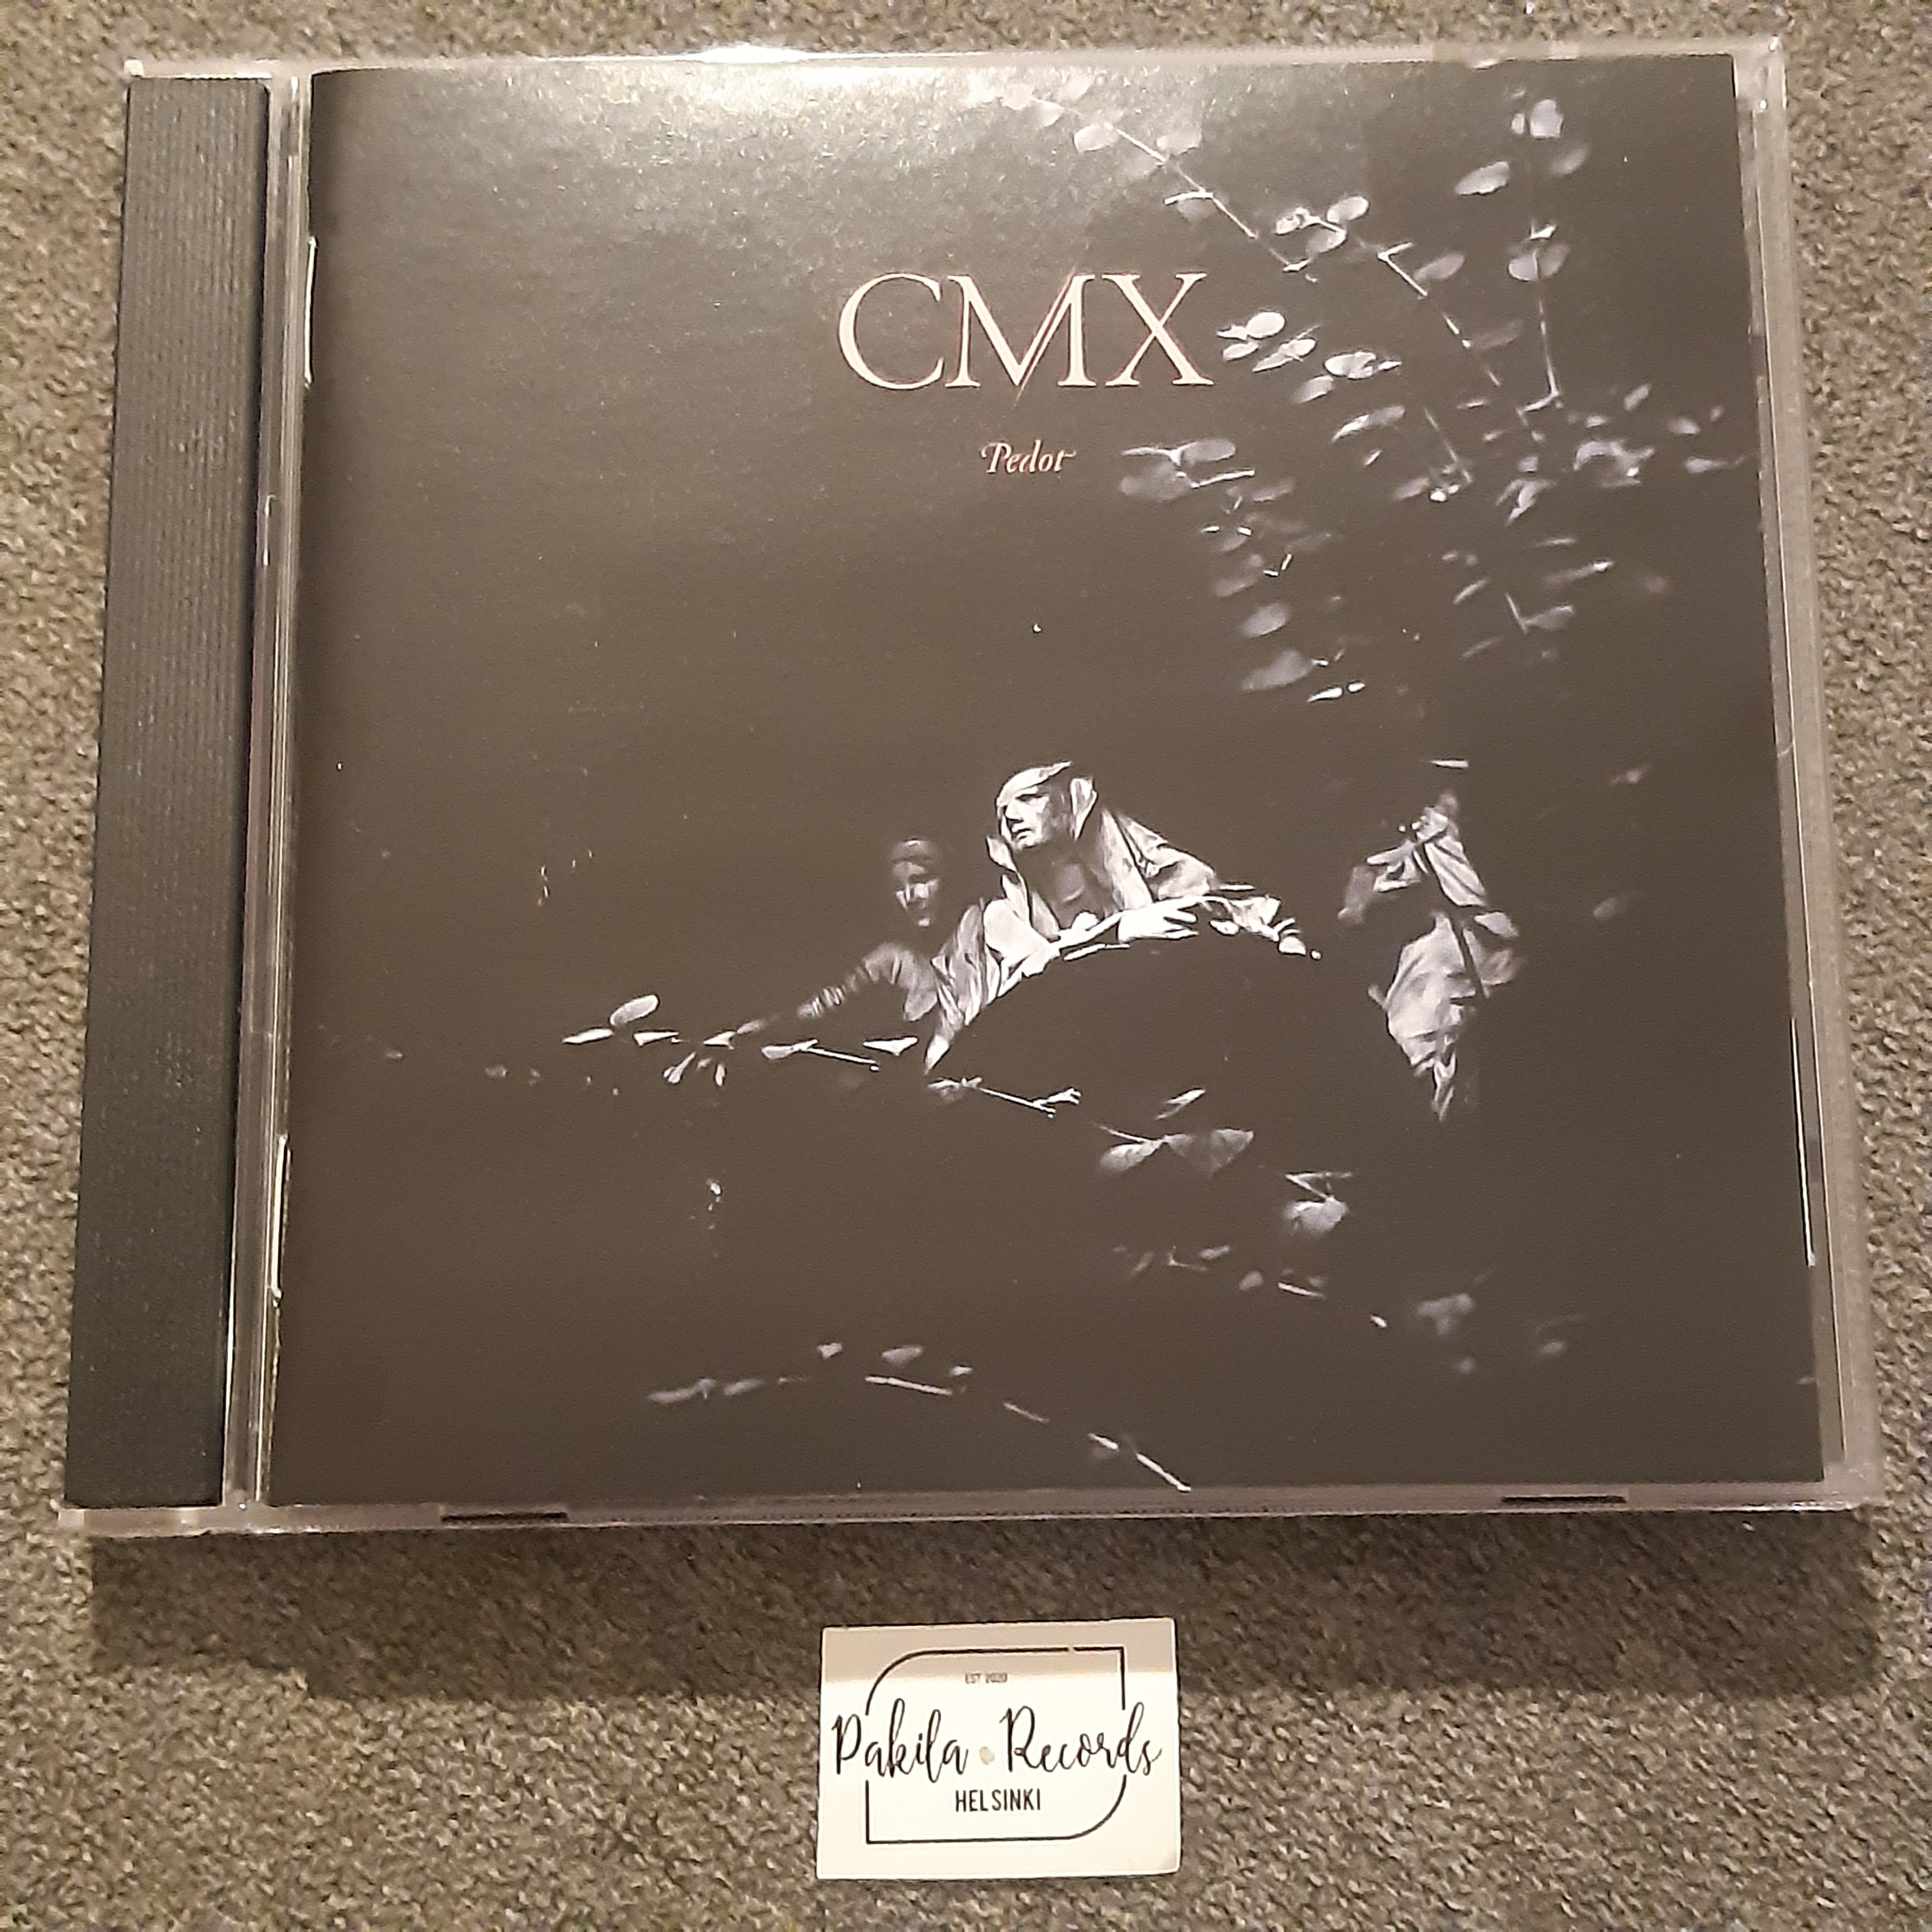 CMX - Pedot - CD (käytetty)